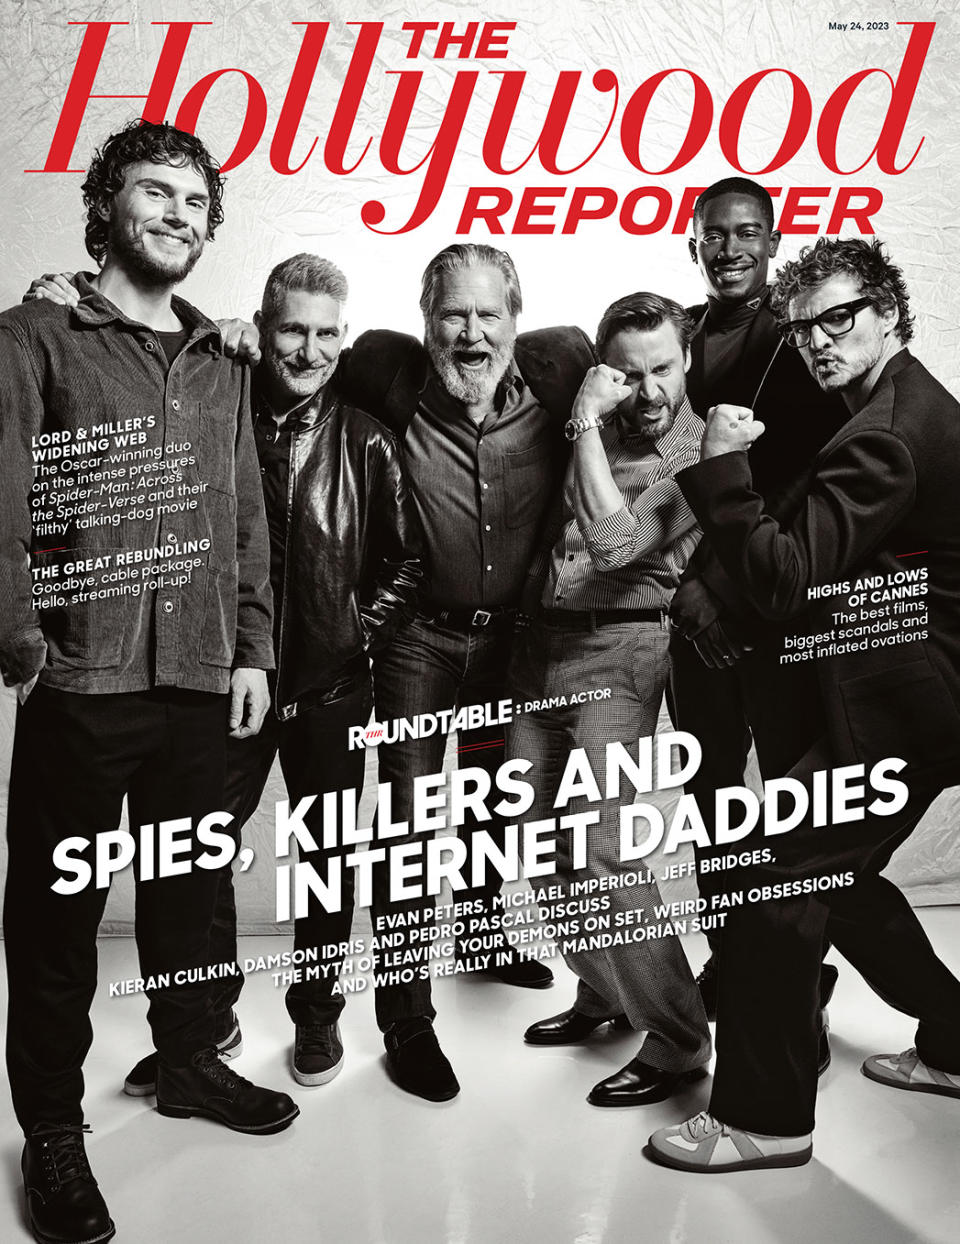 From Left: Evan Peters, Michael Imperioli, Jeff Bridges, Kieran Culkin, Damson Idris and Pedro Pascal